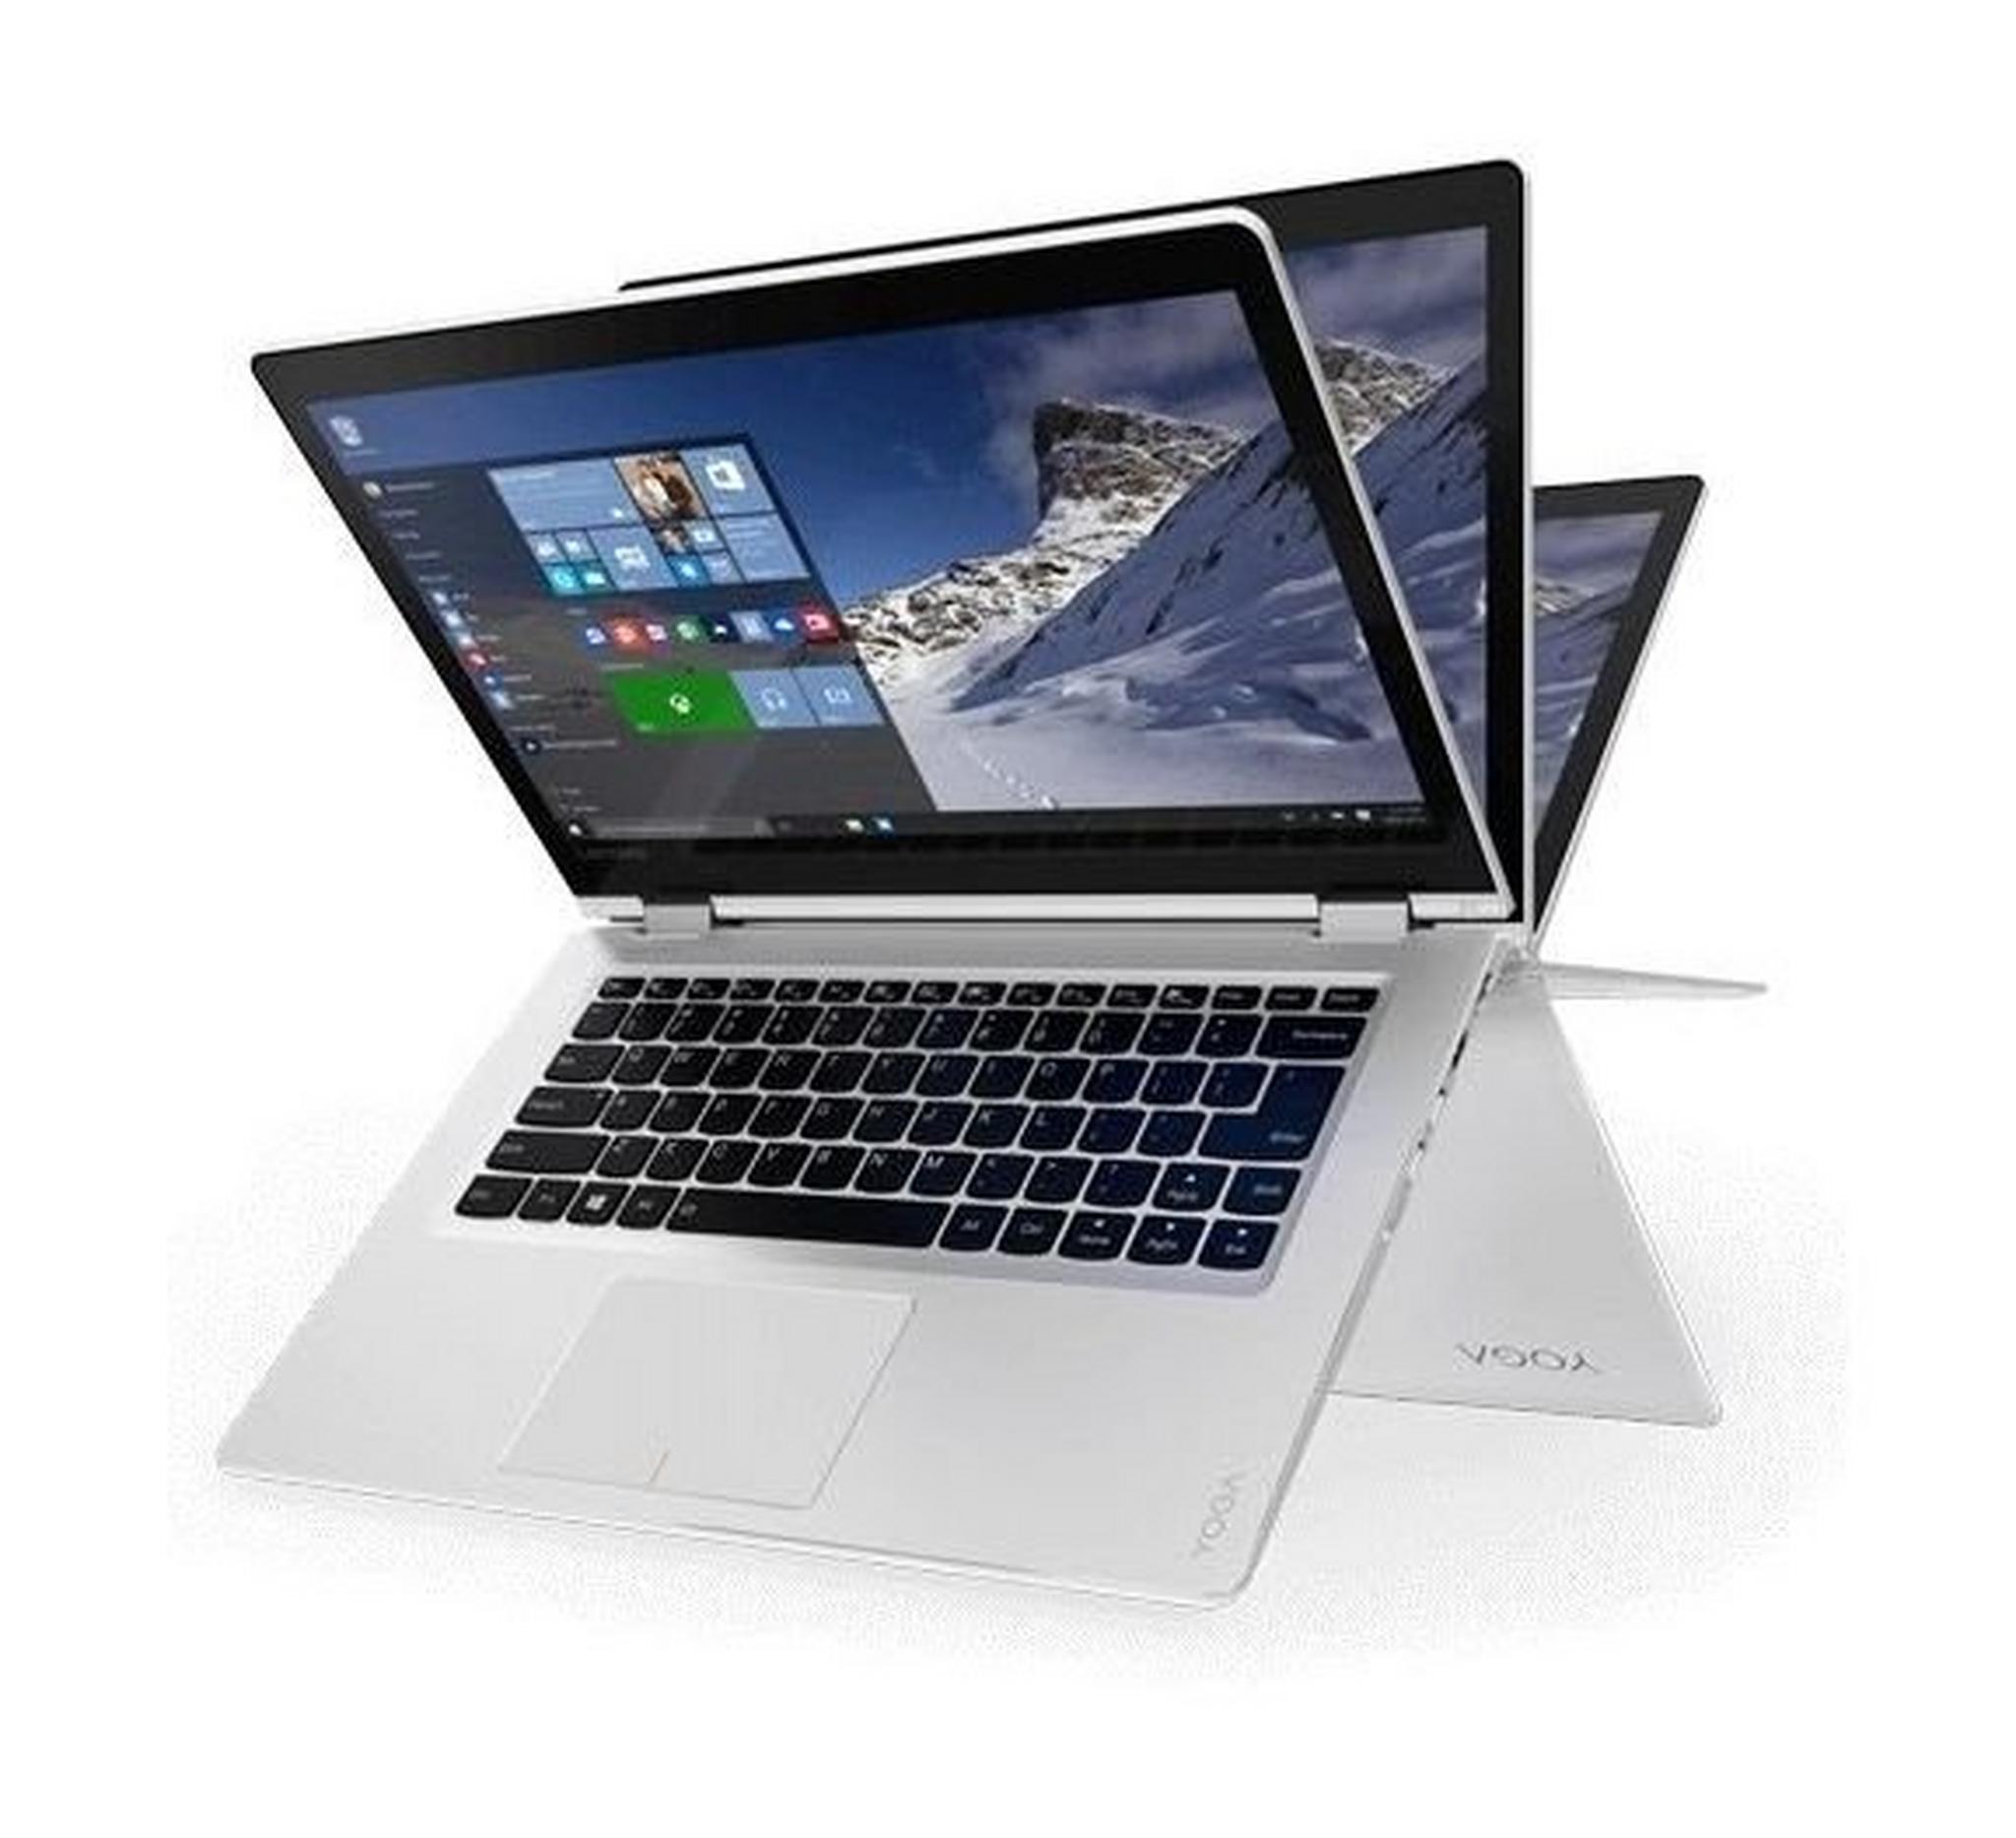 Lenovo Yoga 510 Core-i7 8GB RAM 1TB HDD 2GB AMD 14-inch Touchscreen Convertible Laptop – White